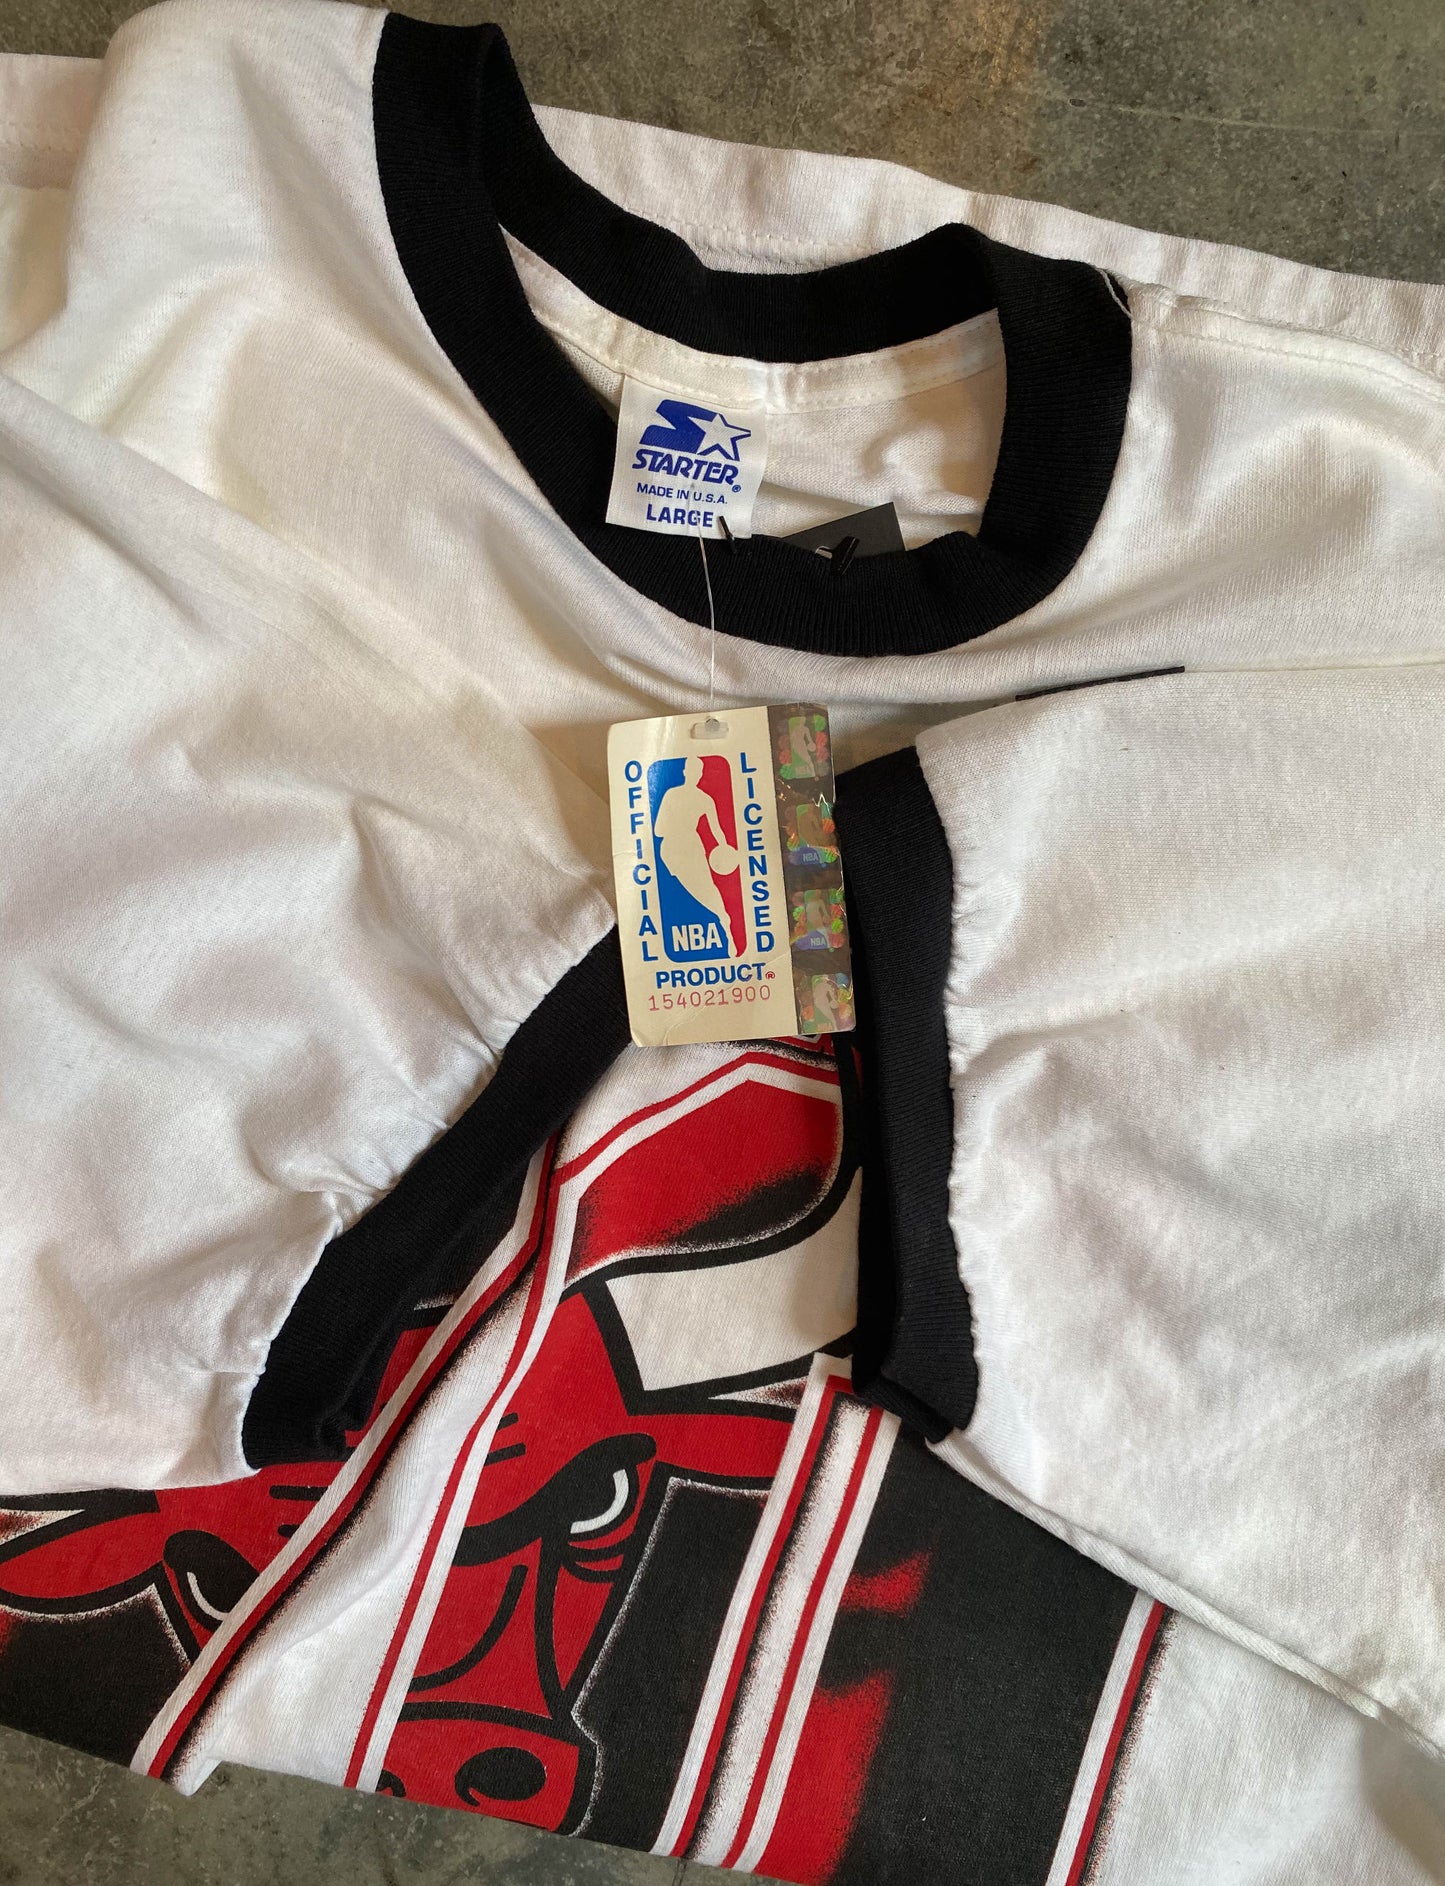 Vintage 1996 Chicago Bulls Graphic T Shirt NBA 70 Victories '95-'96 Season Deadstock Ringer Tee White Unisex XL